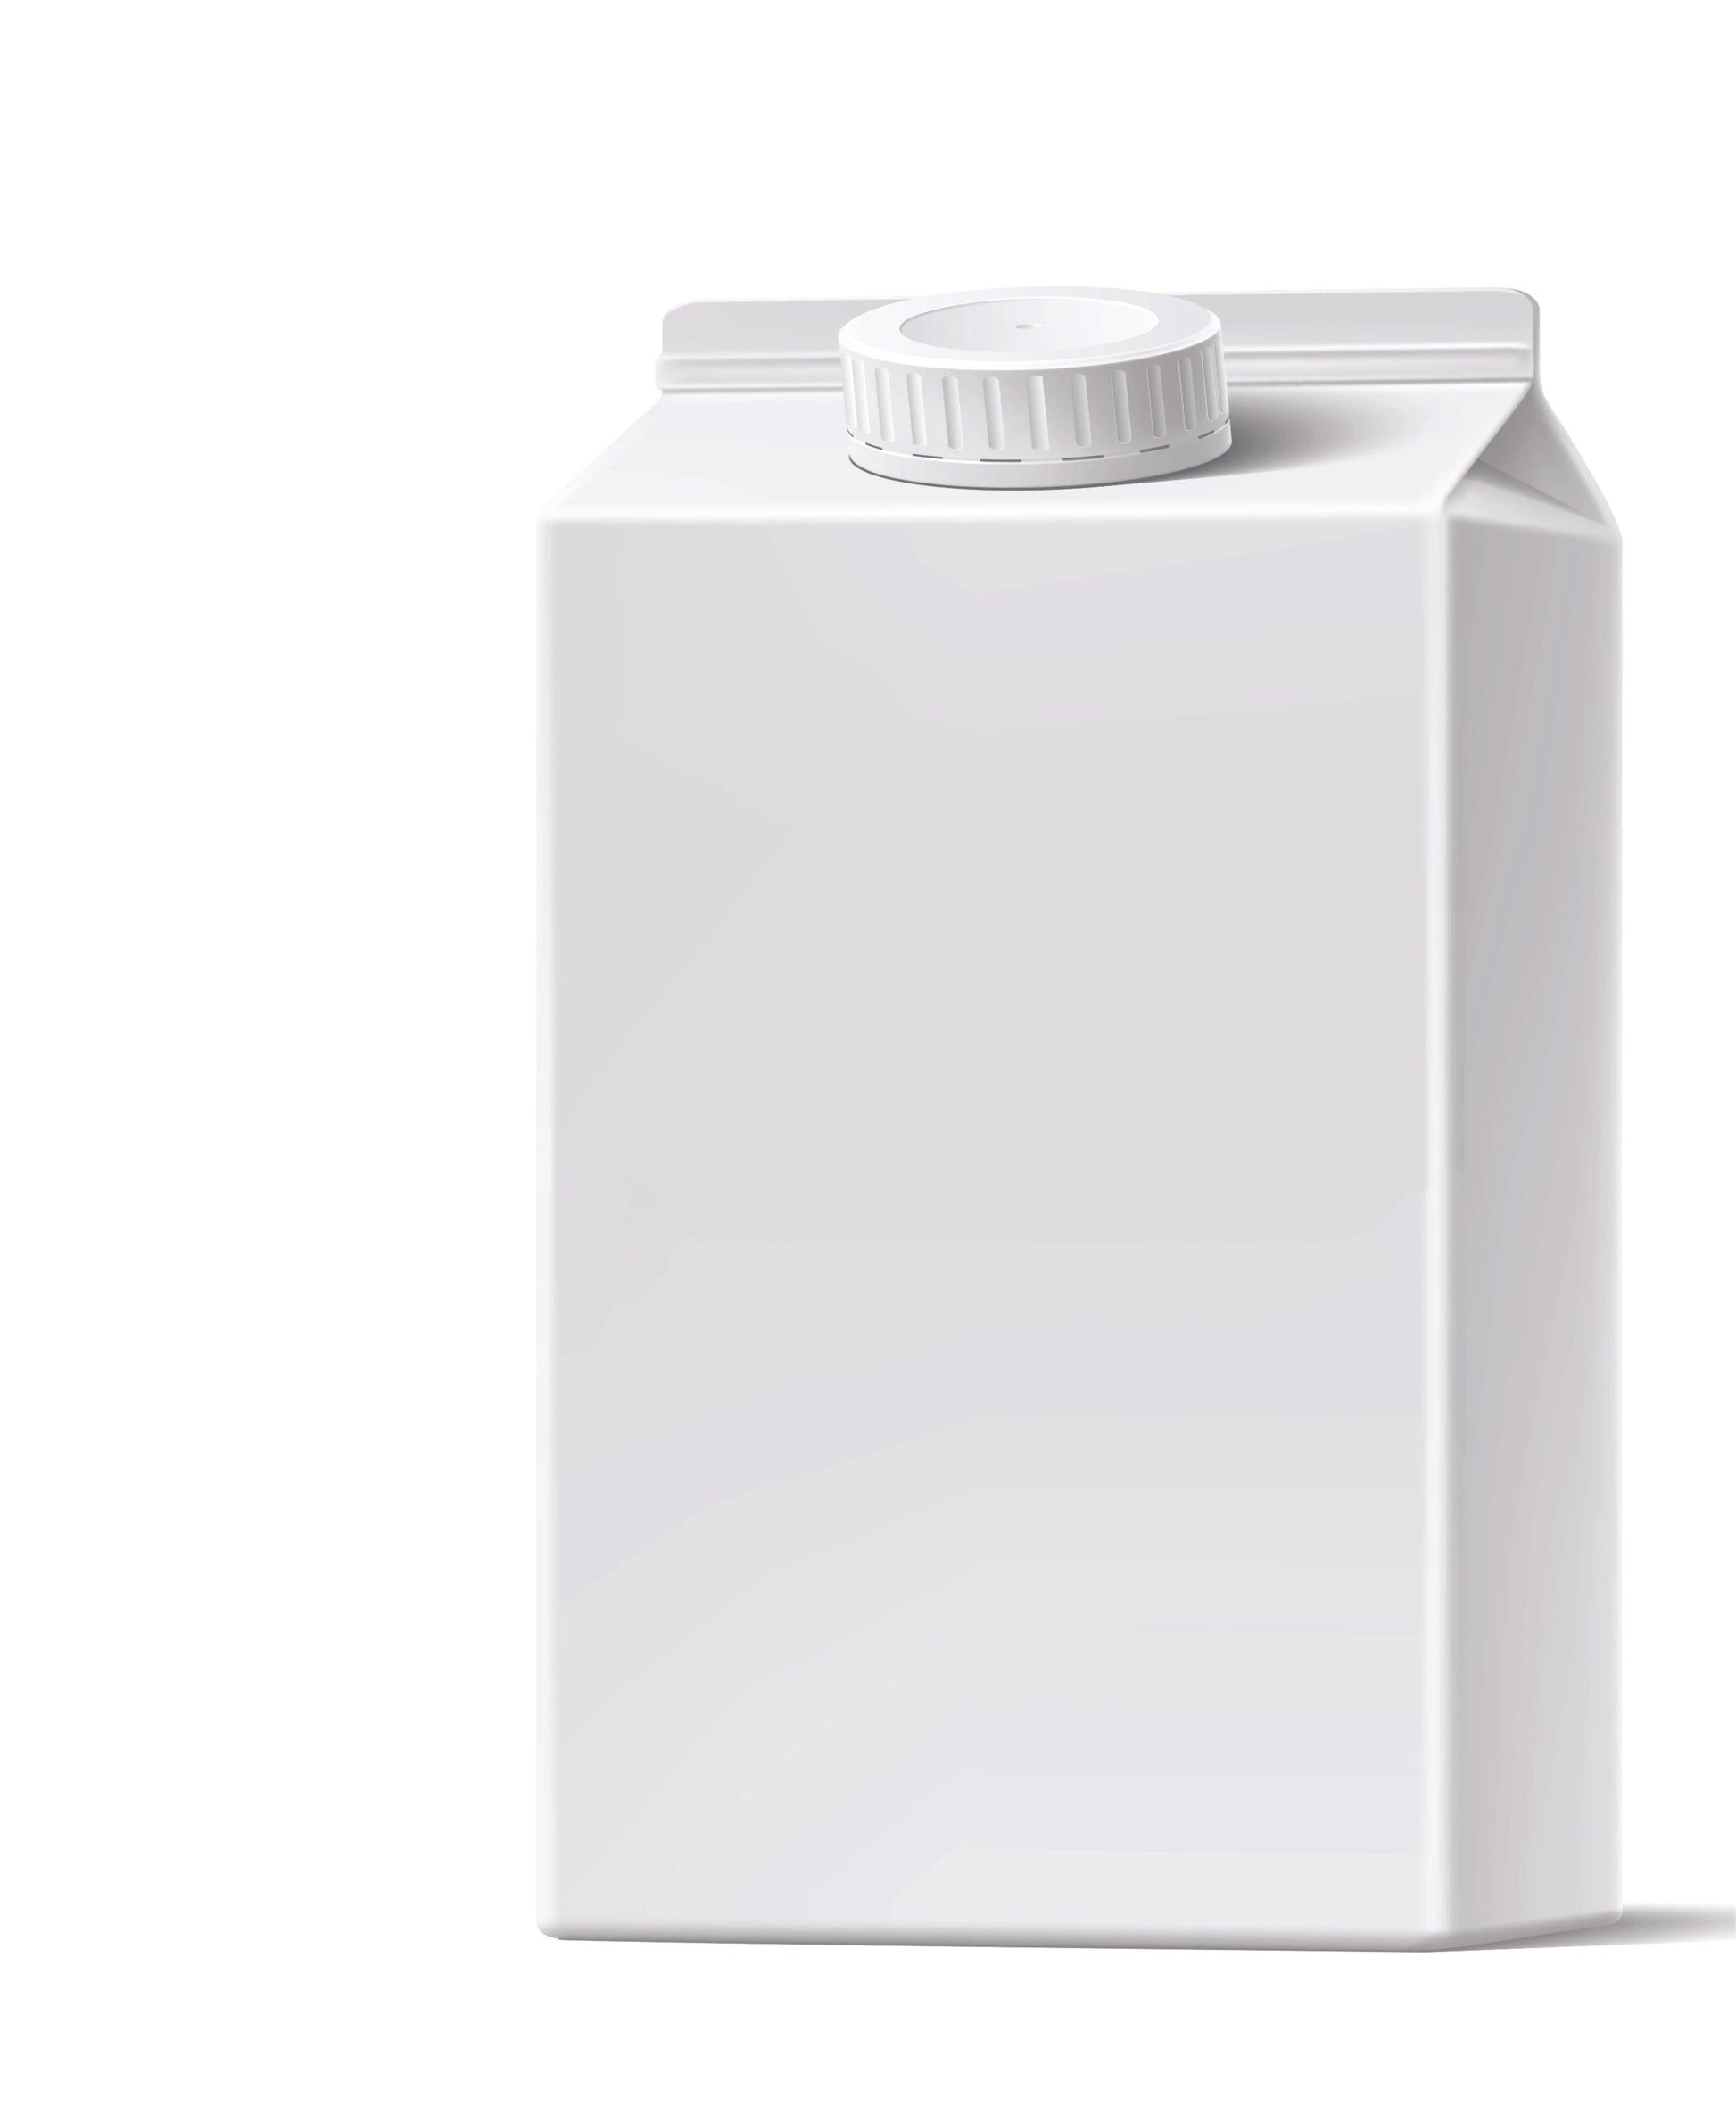 Tetra Drink Containers, Machine filled , MQO 300k per SKU - MSN Packaging LLC